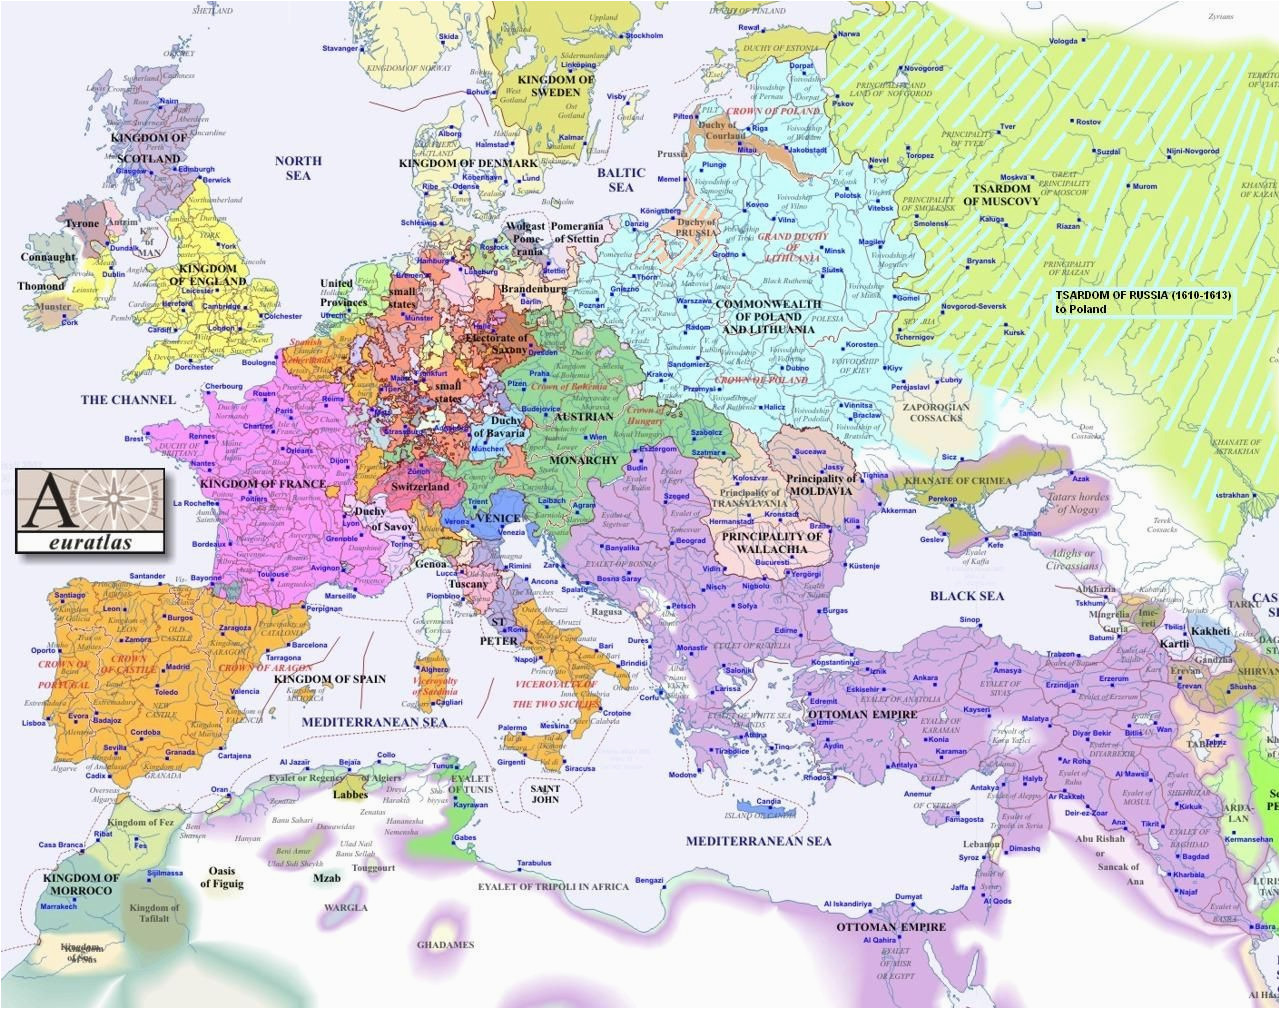 Europe 17th Century Map Europe Map 1600 17th Century Wikipedia the Free